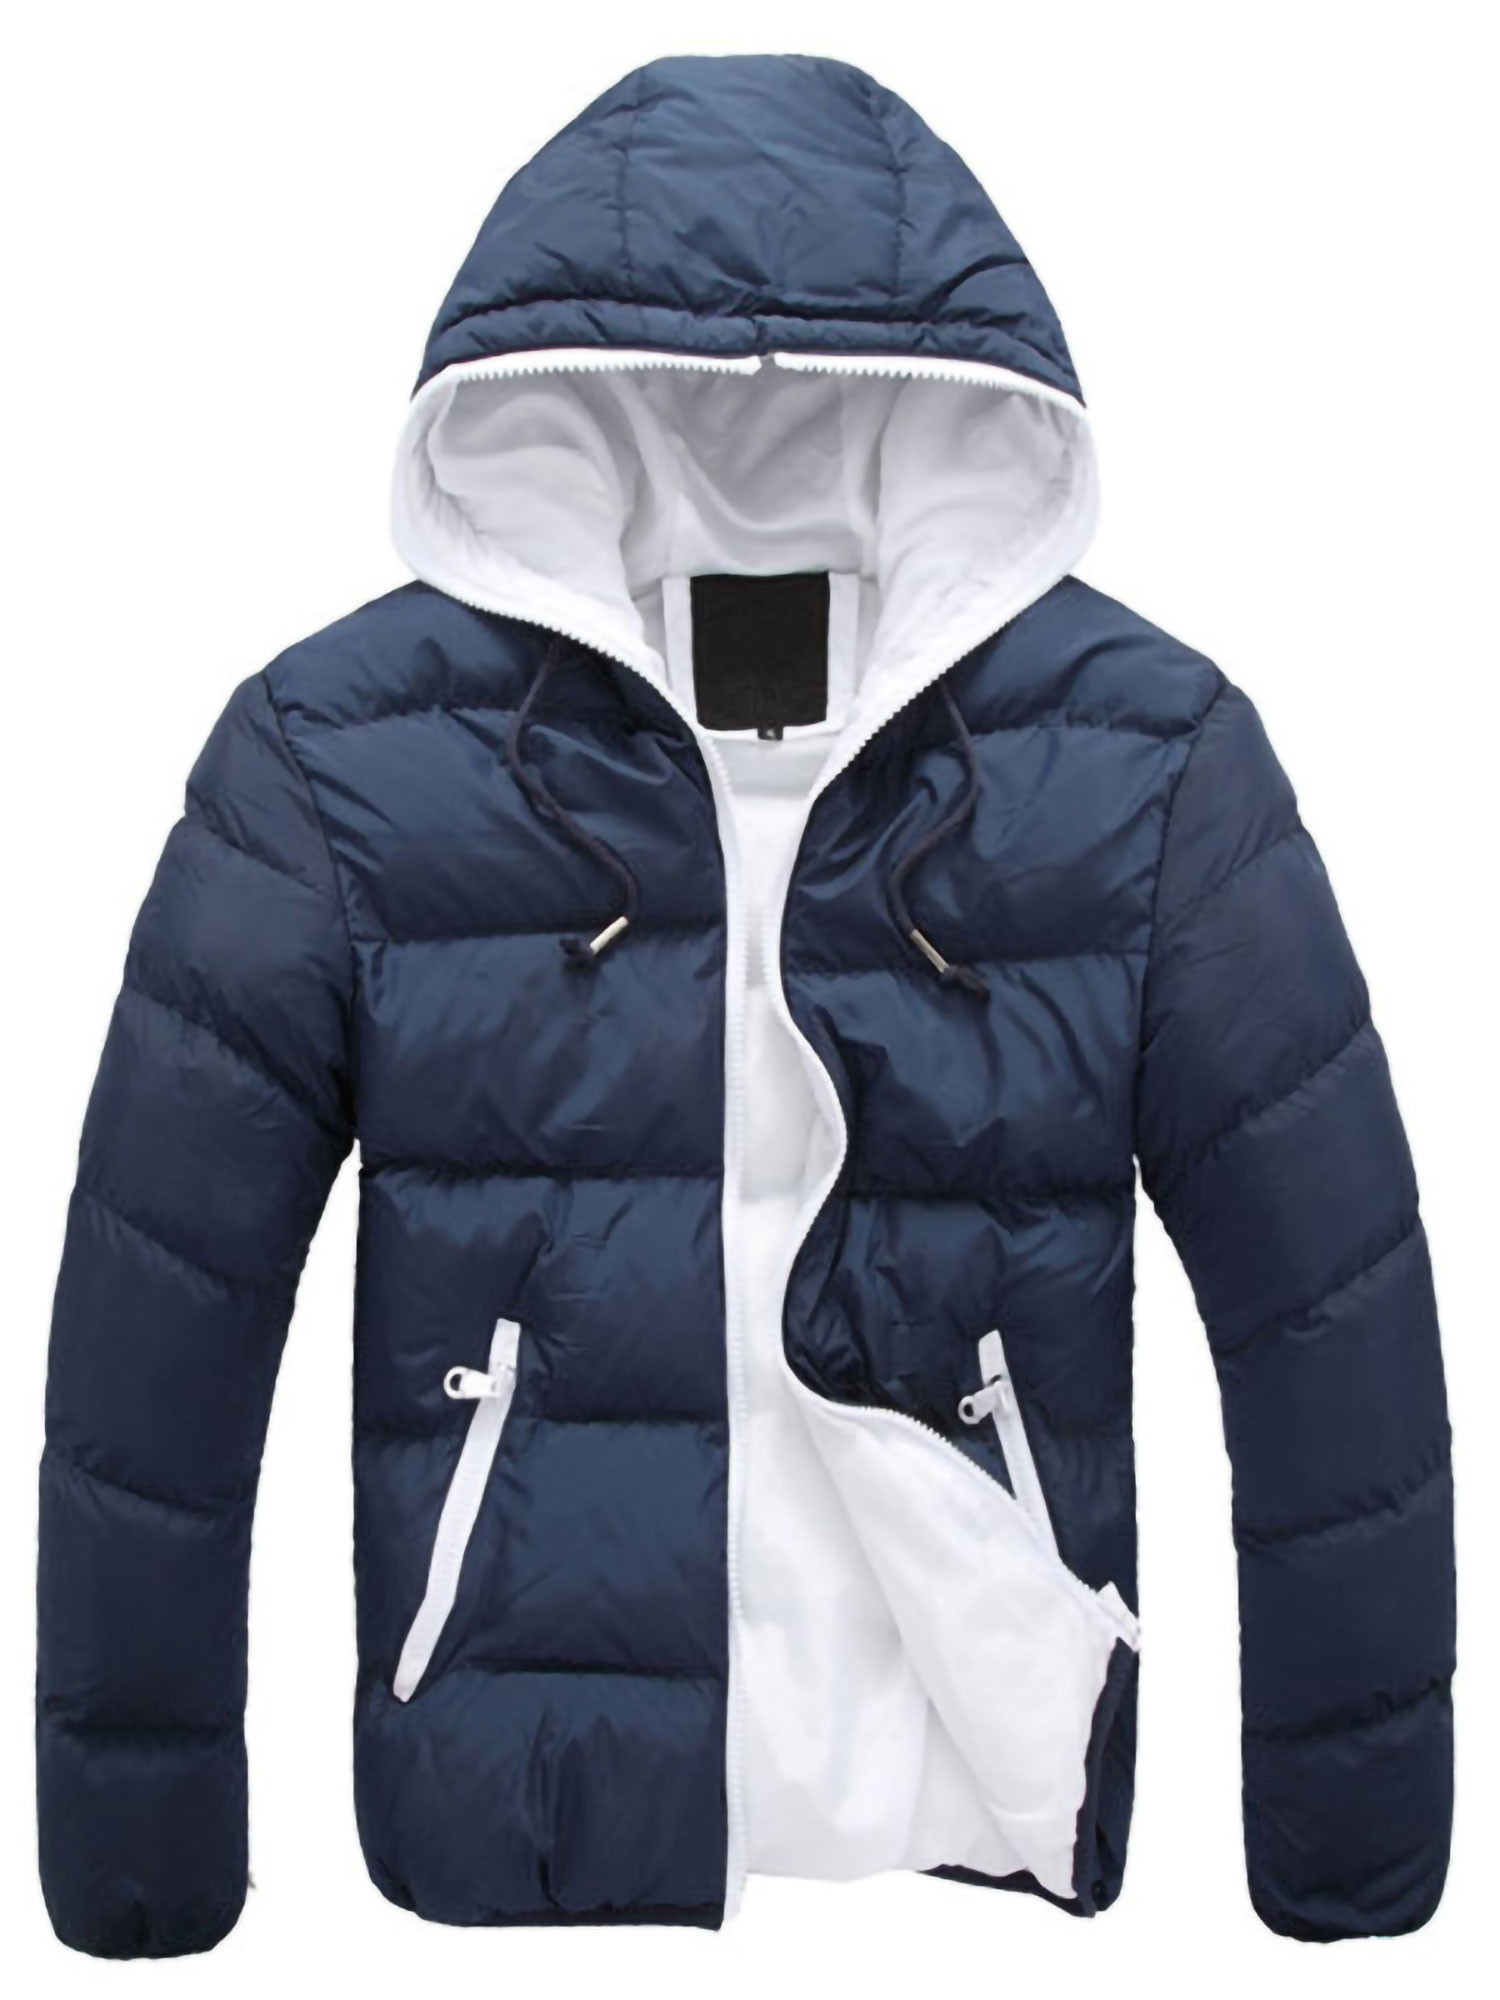 Avamo Mens Winter Warm Long Sleeve Windproof Hoodie Snow Ski Jacket Plus Size Mountain Snowboarding Coat Classic Camping Bubble Jackets - image 1 of 2